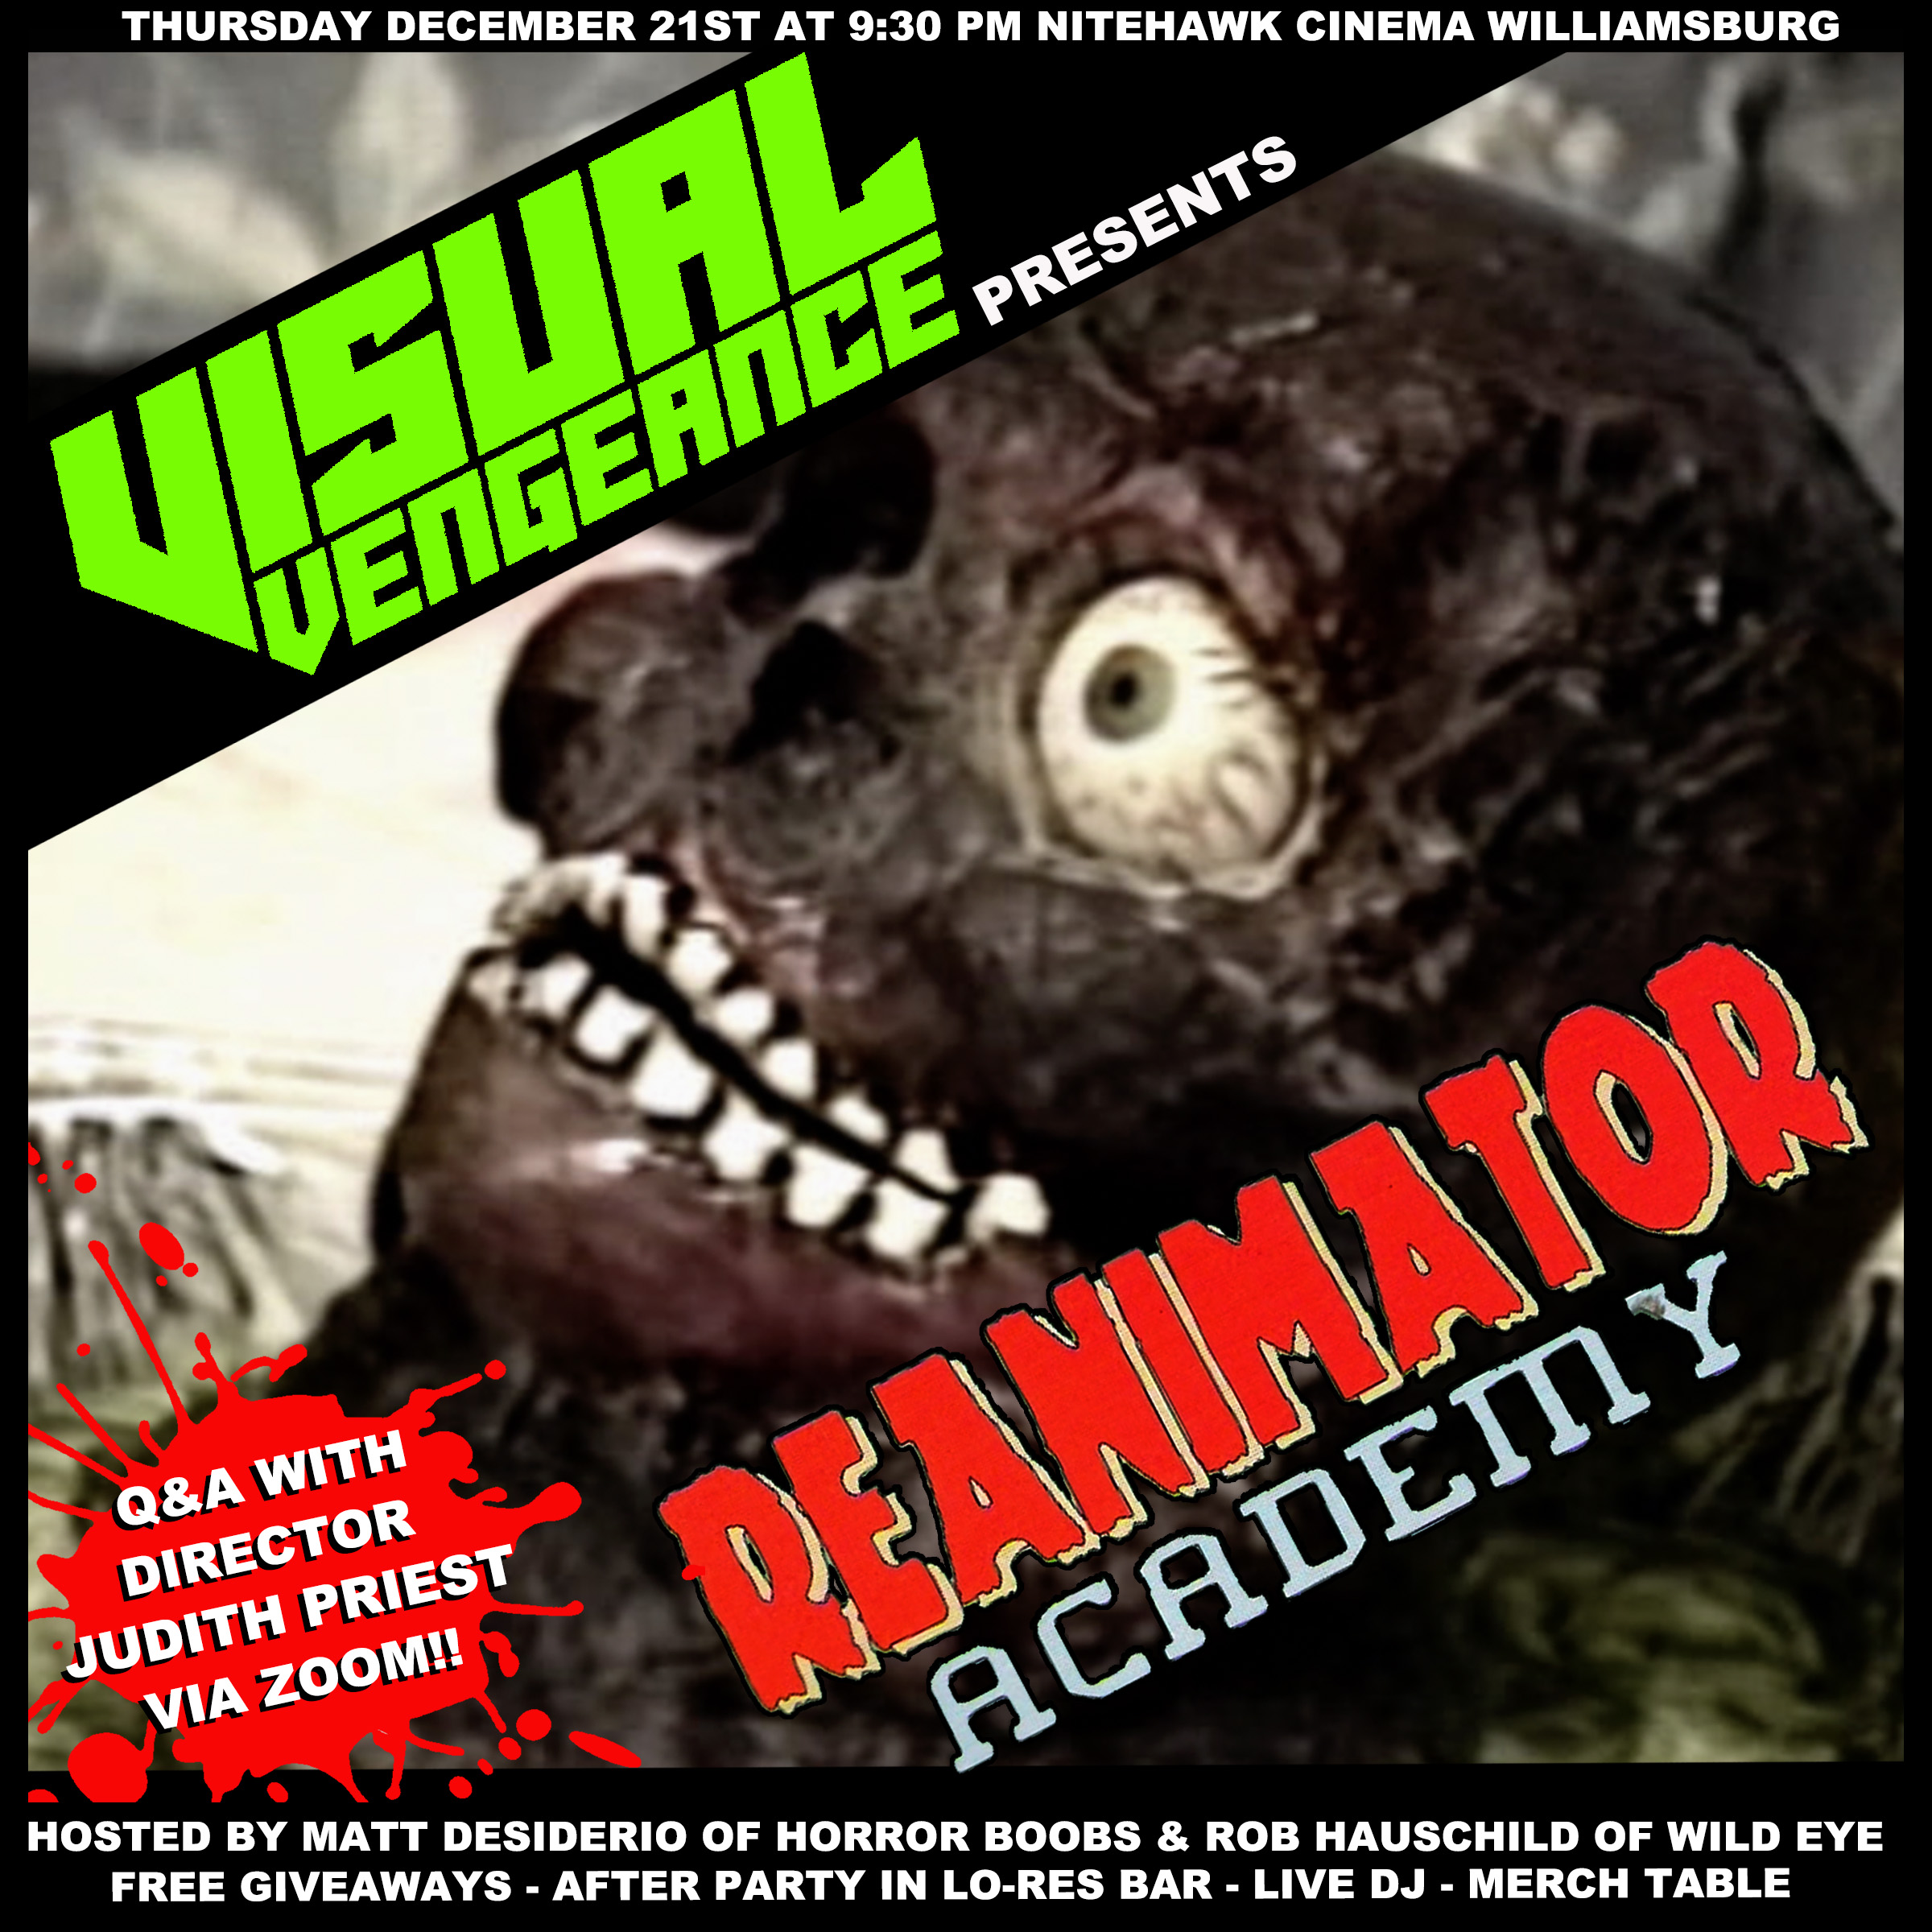 Vengeance, Official Website